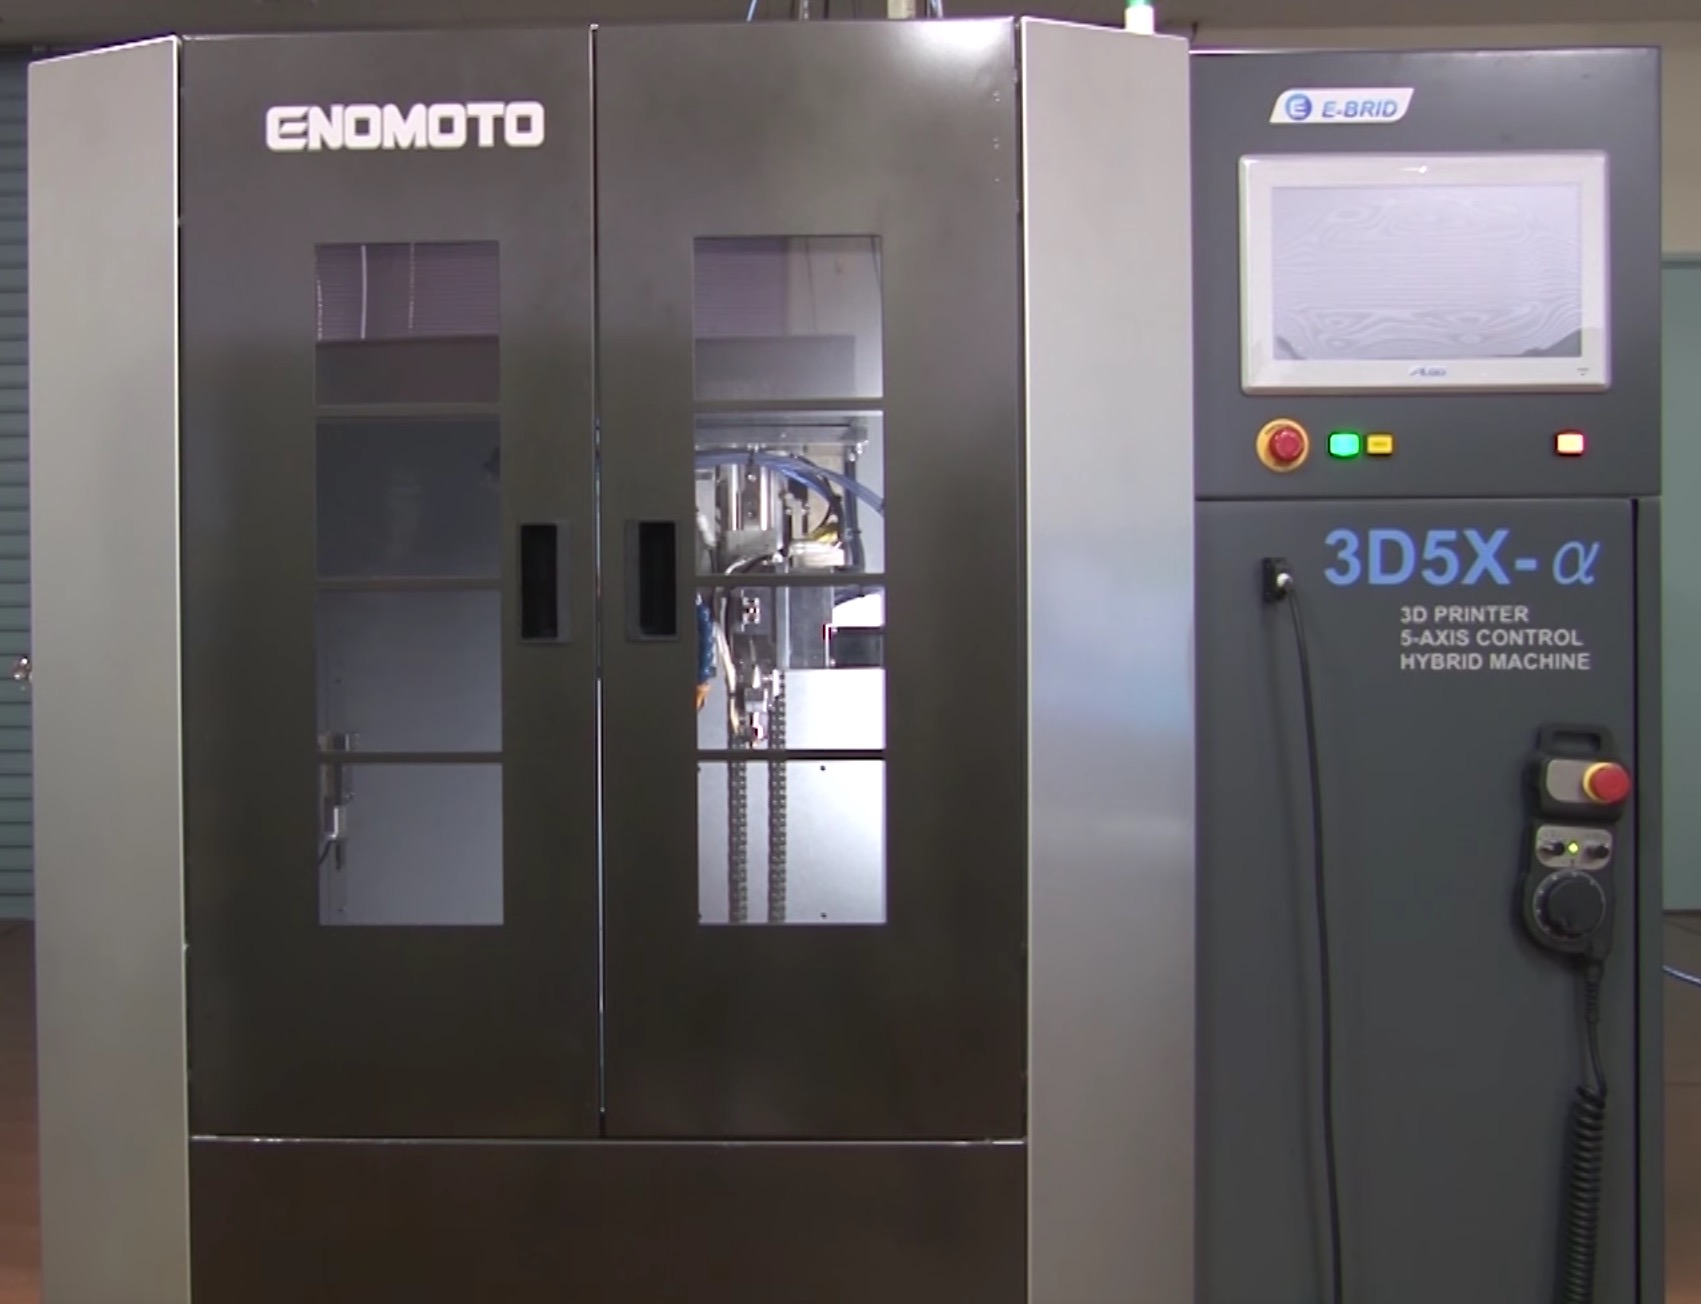  The experimental ENOMOTO hybrid CNC / 3D printer, the 3D5X-a 